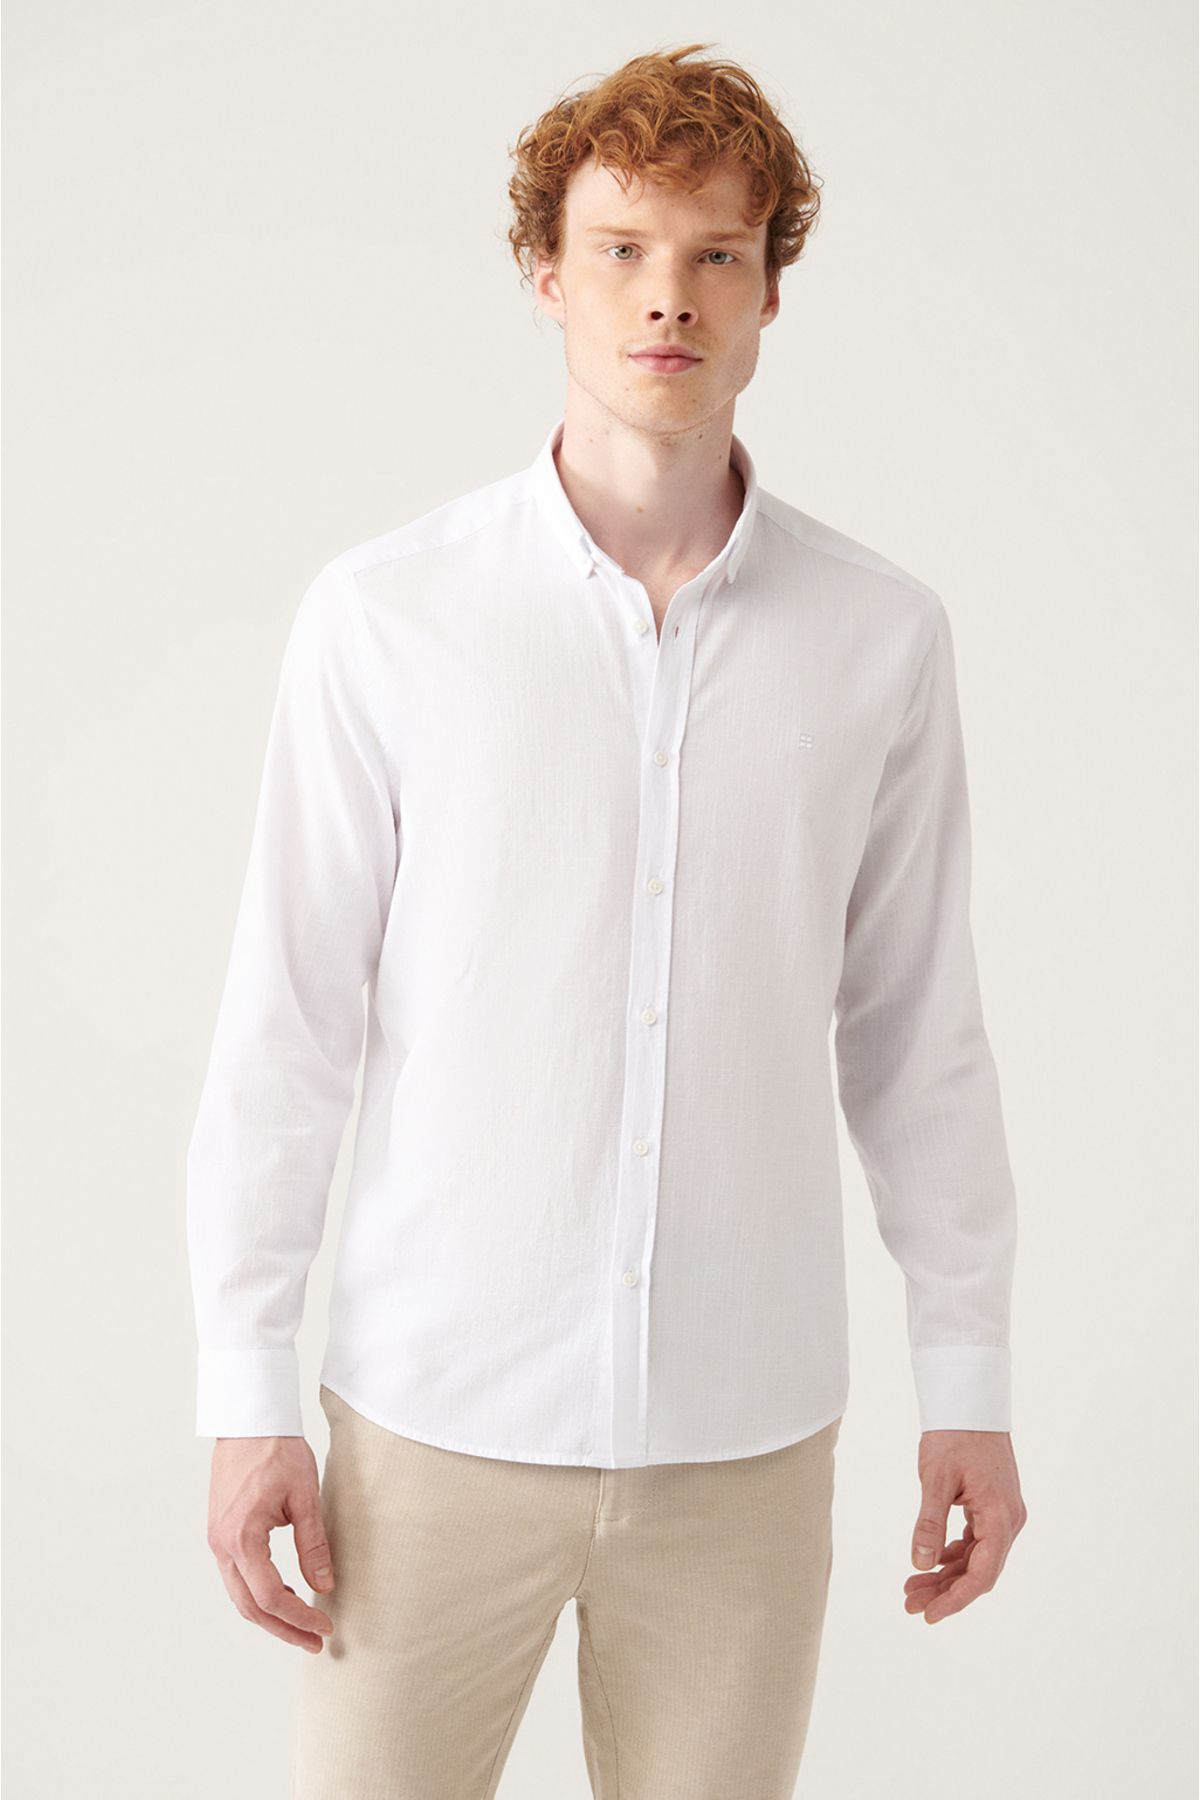 Avva Erkek Beyaz Gömlek Düğmeli Yaka Comfort Fit %100 Pamuk Keten Dokulu E002141